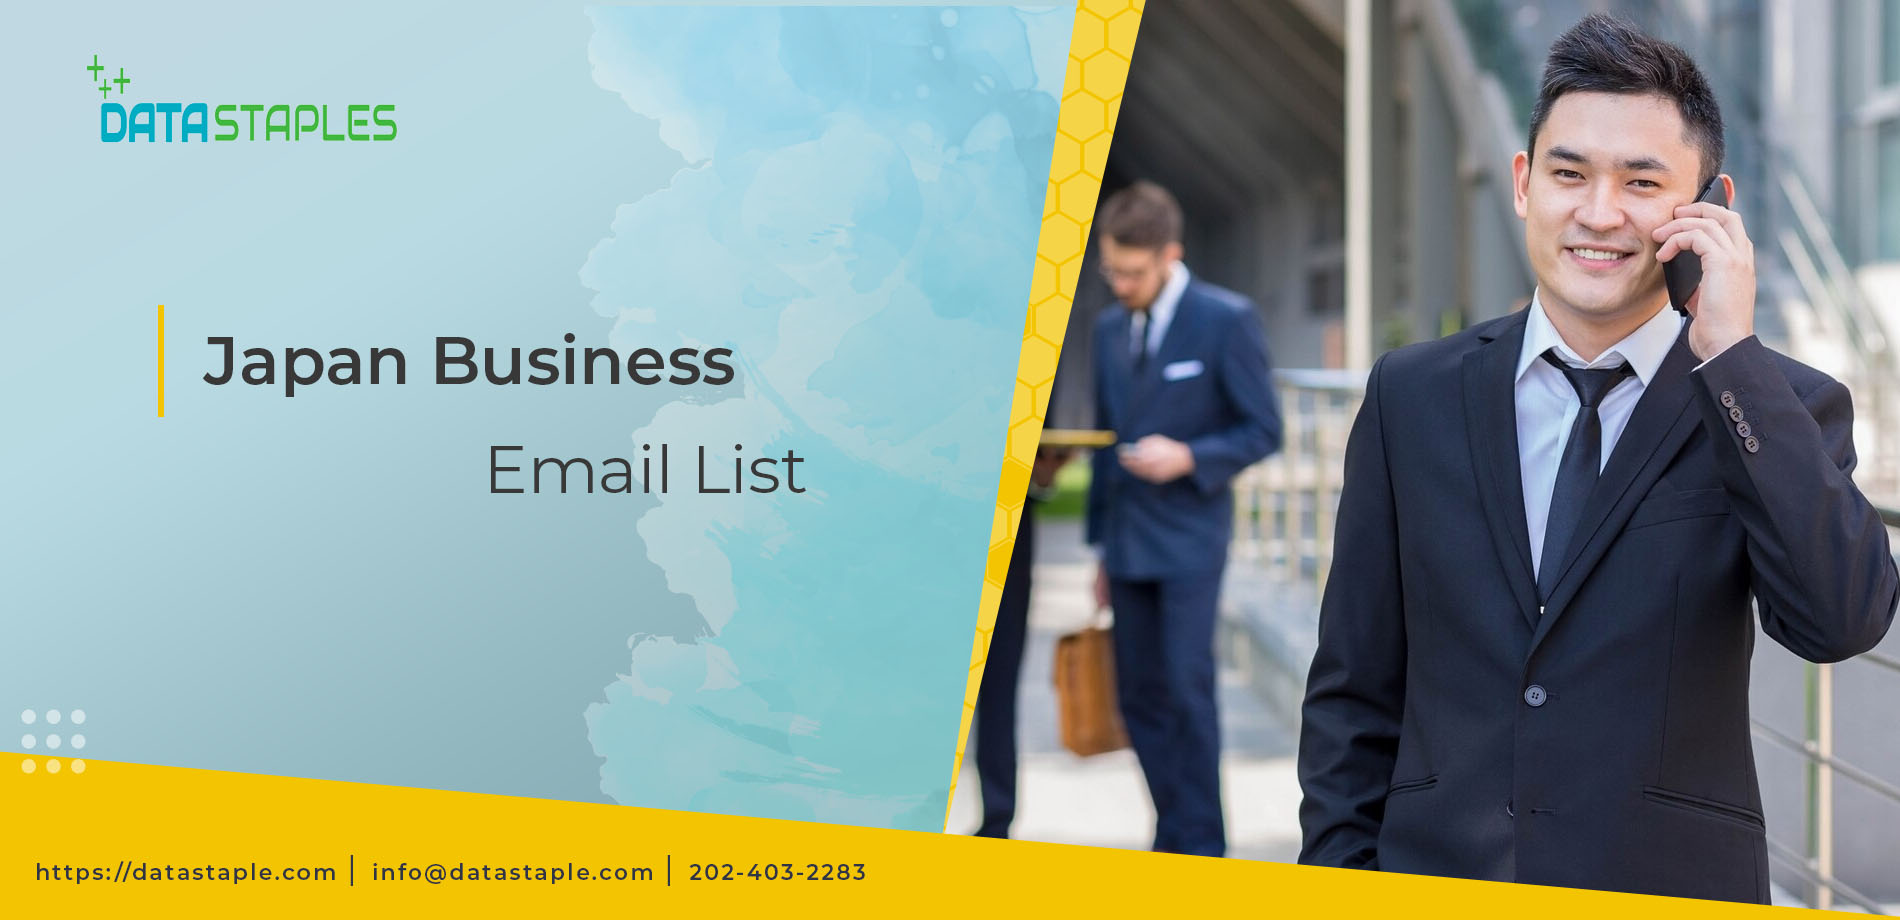 Japan Business Email List | DataStaples